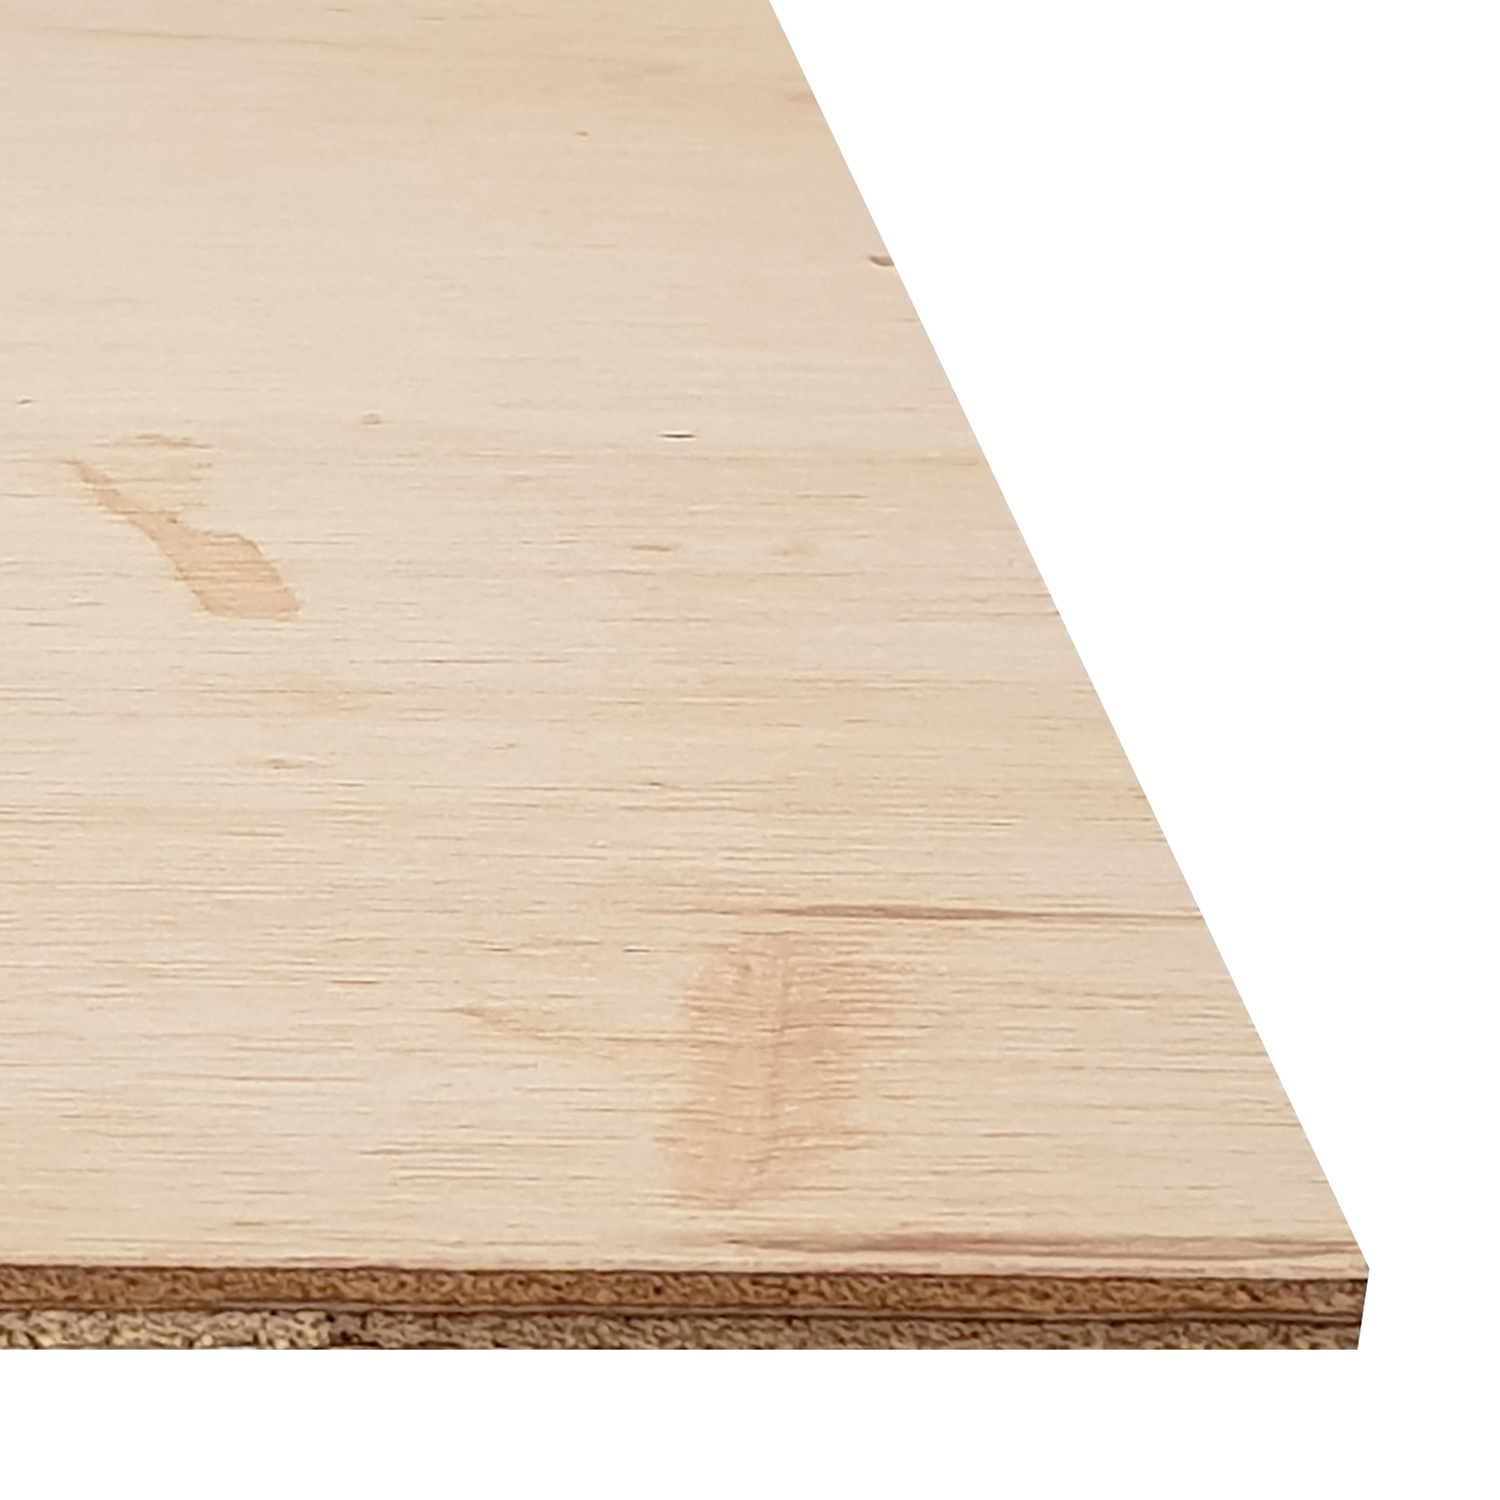 Plywood – Marine Grade